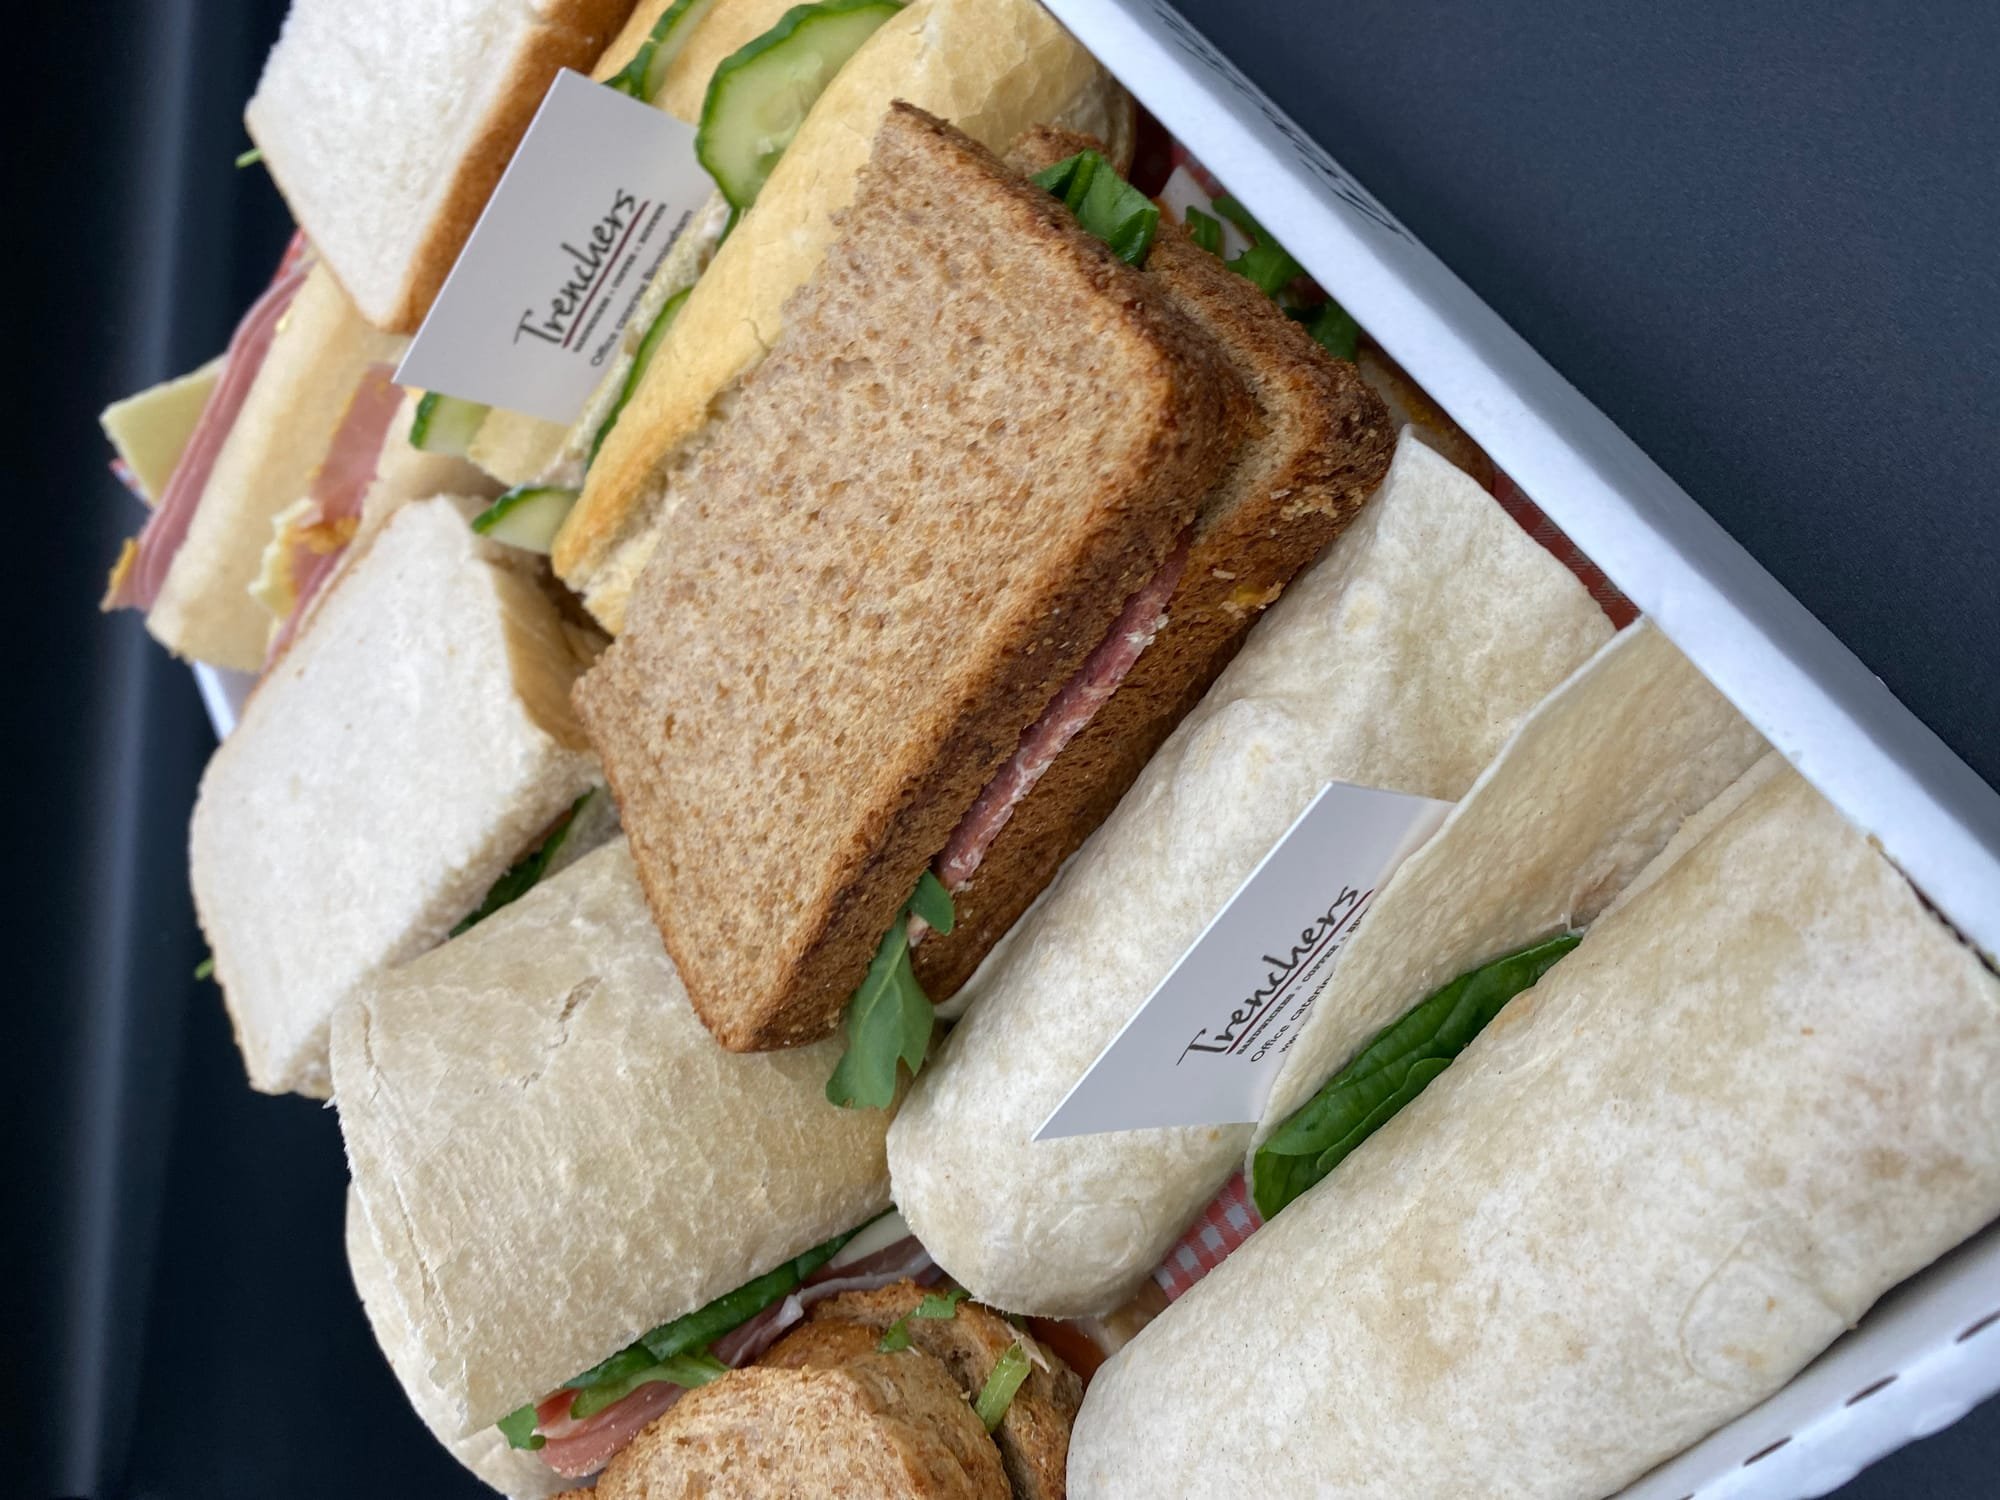 New classic sandwich platters